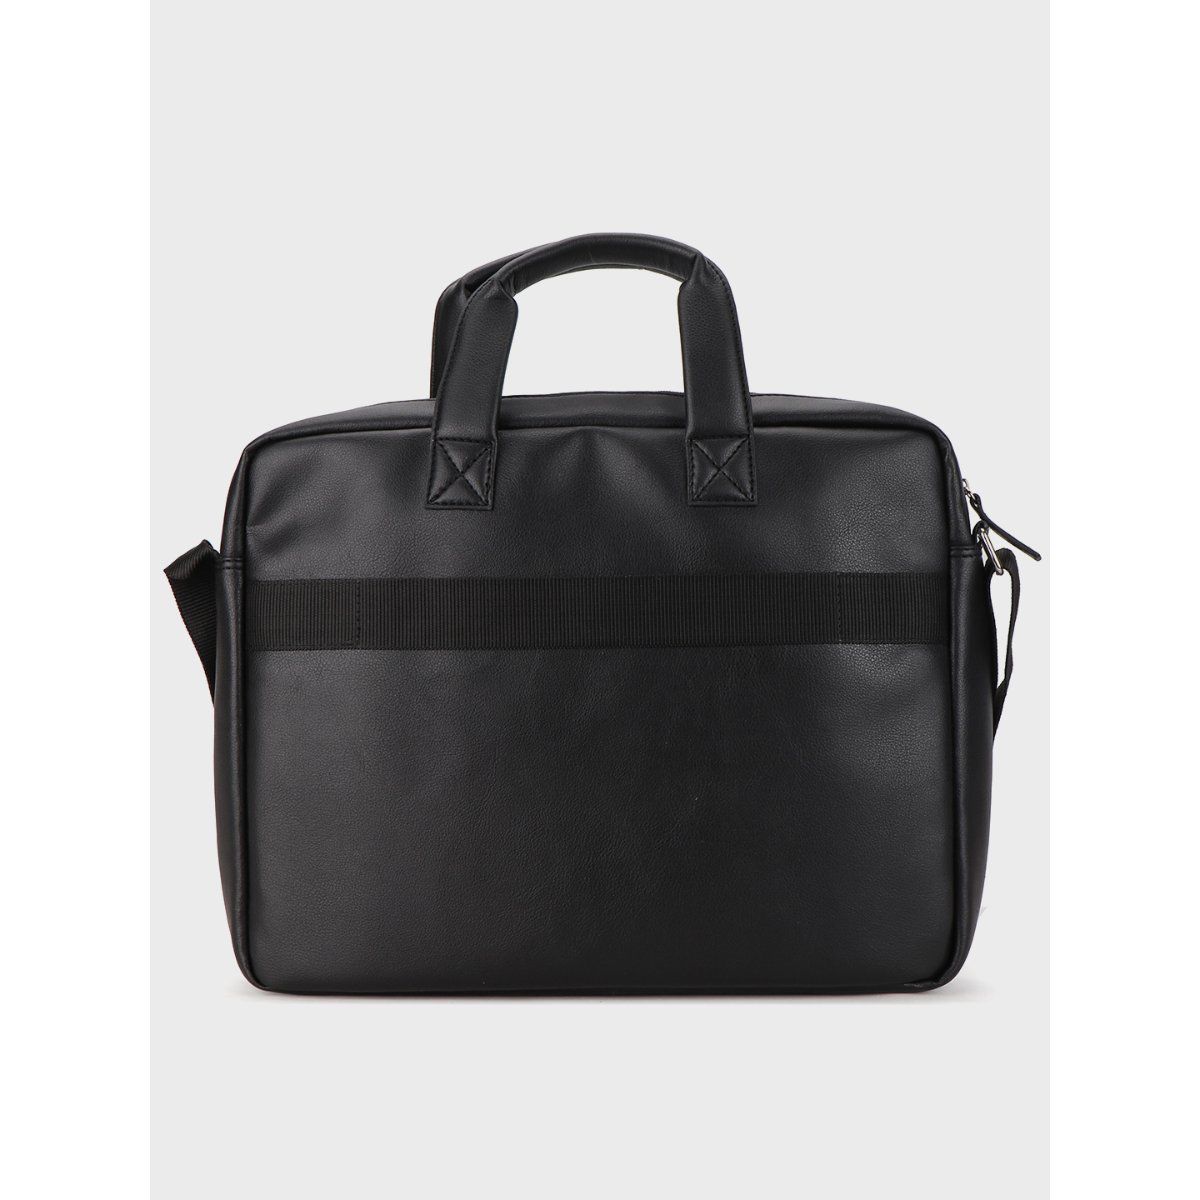 Swiss Military Larin Black Leather Laptop Bag for Men: Buy Swiss ...